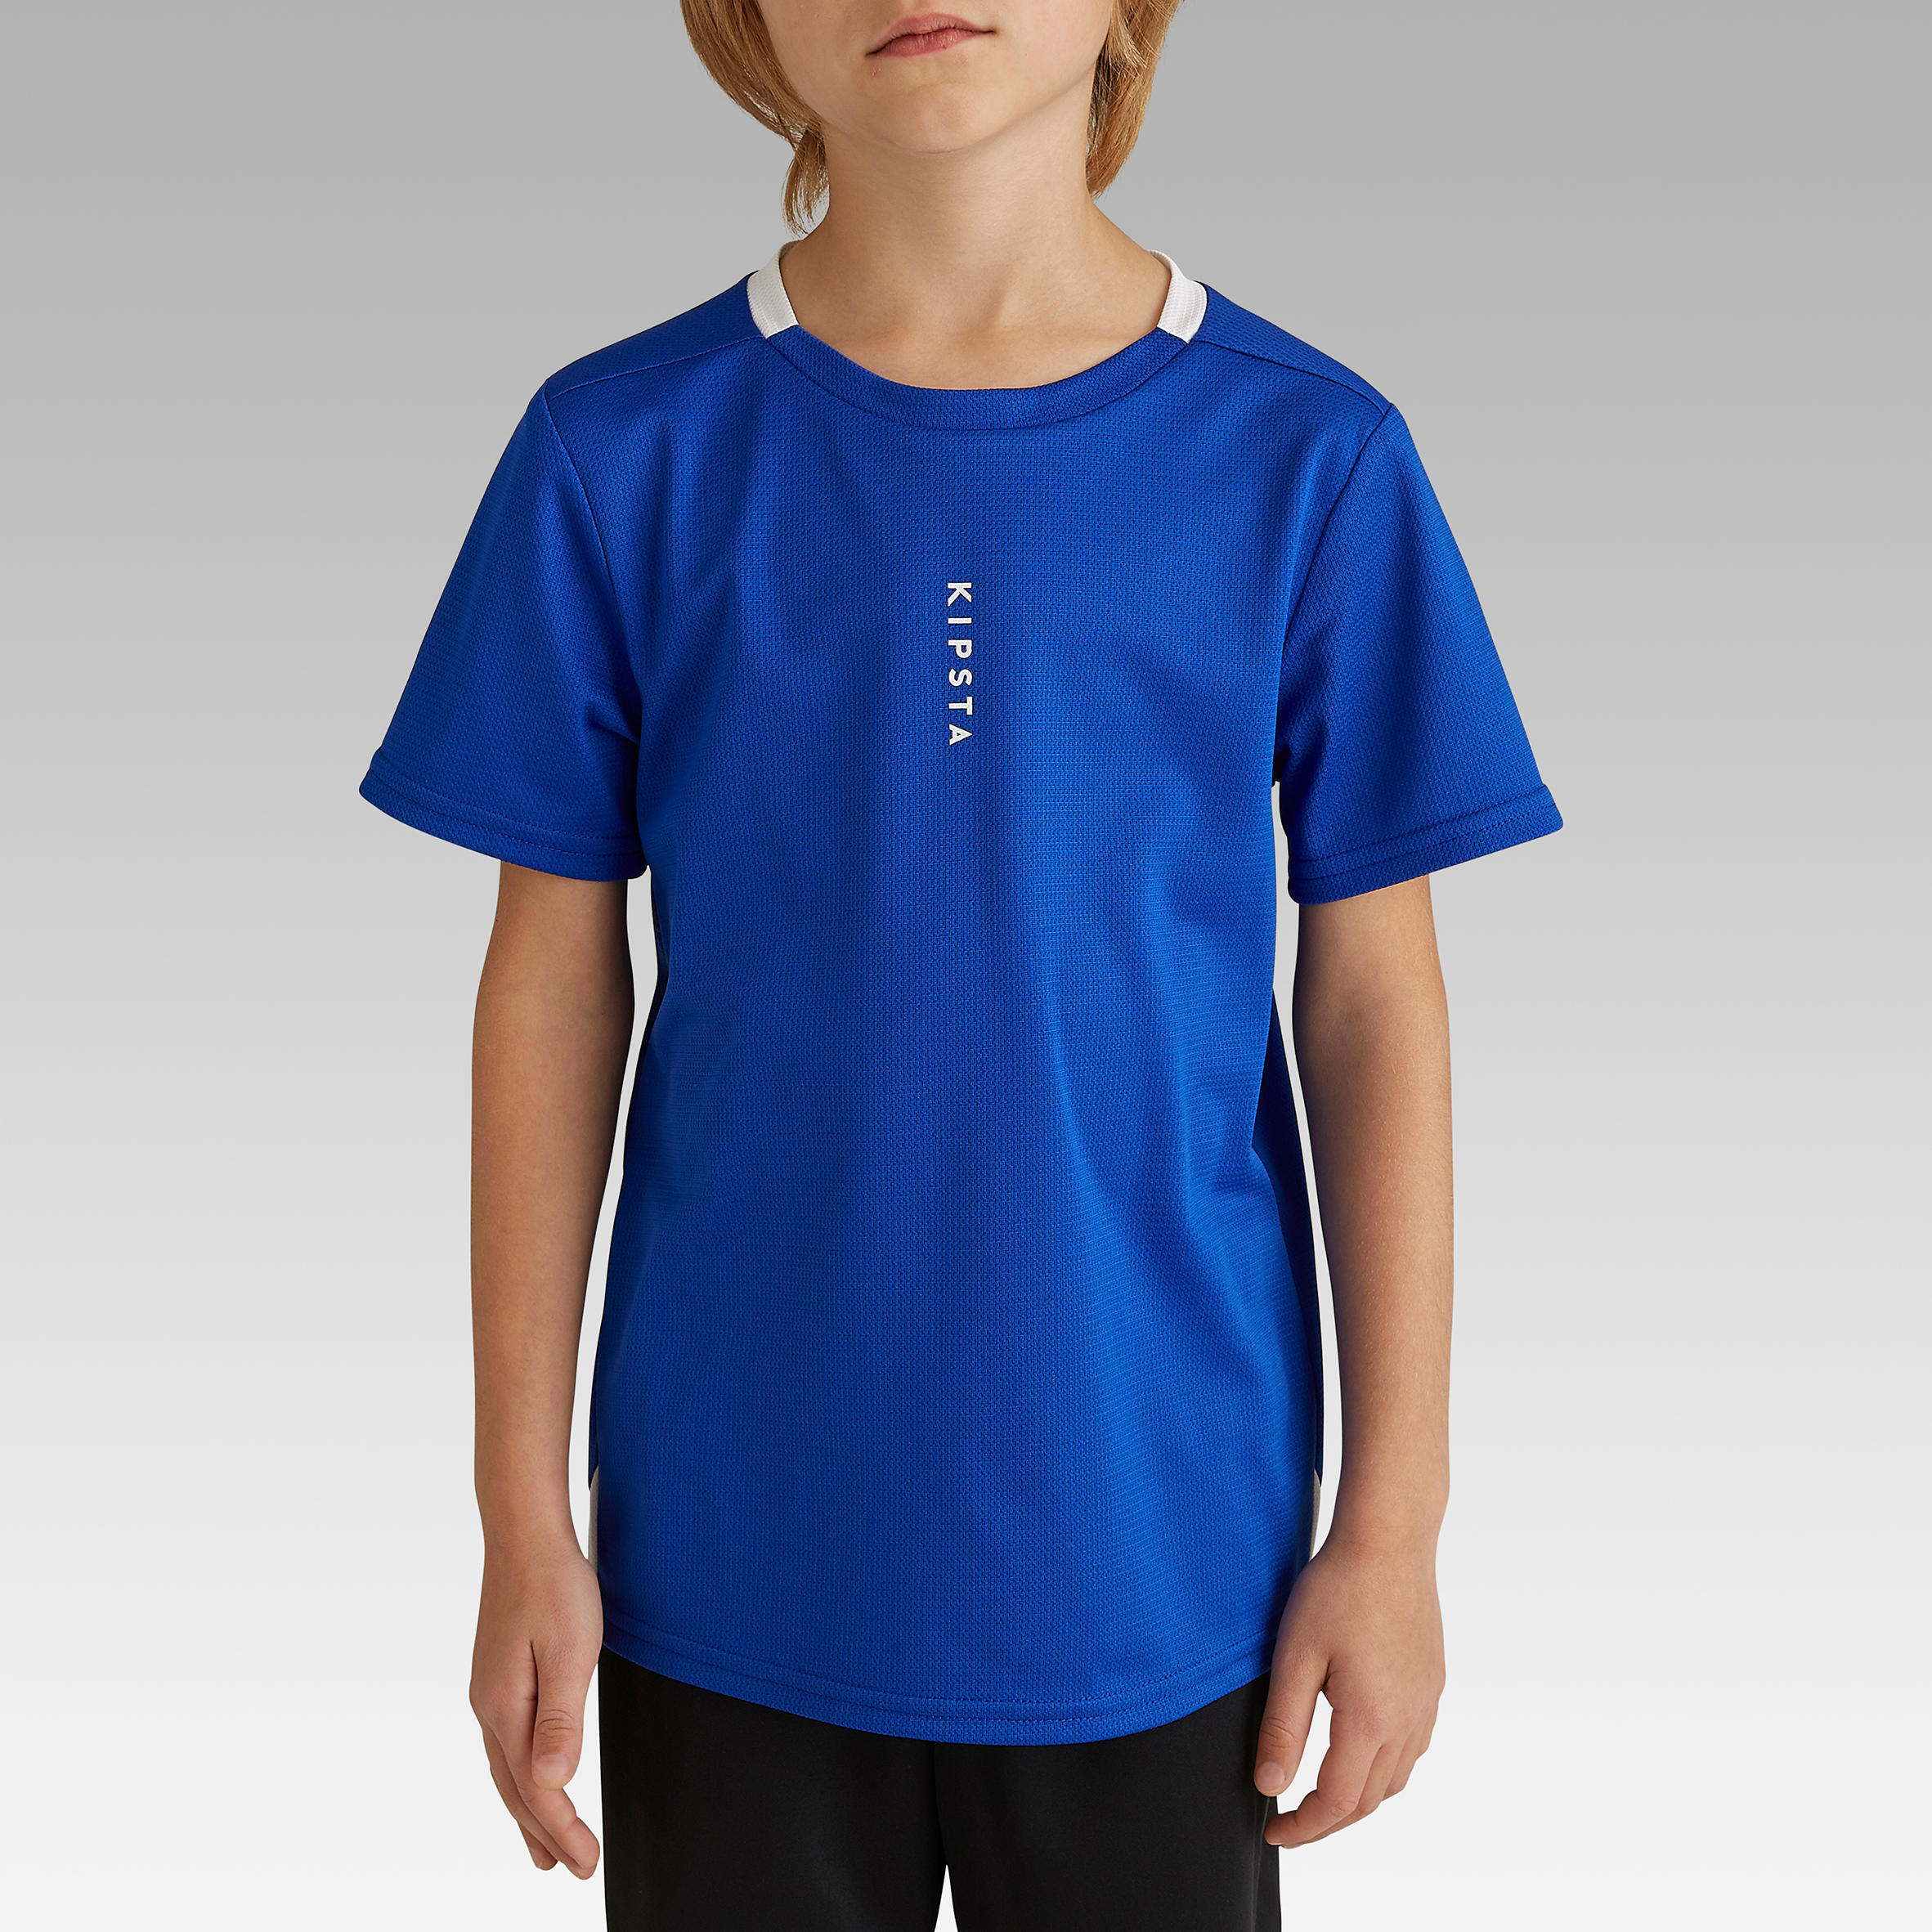 F100 Kids' Football Shirt - Indigo Blue 2/8